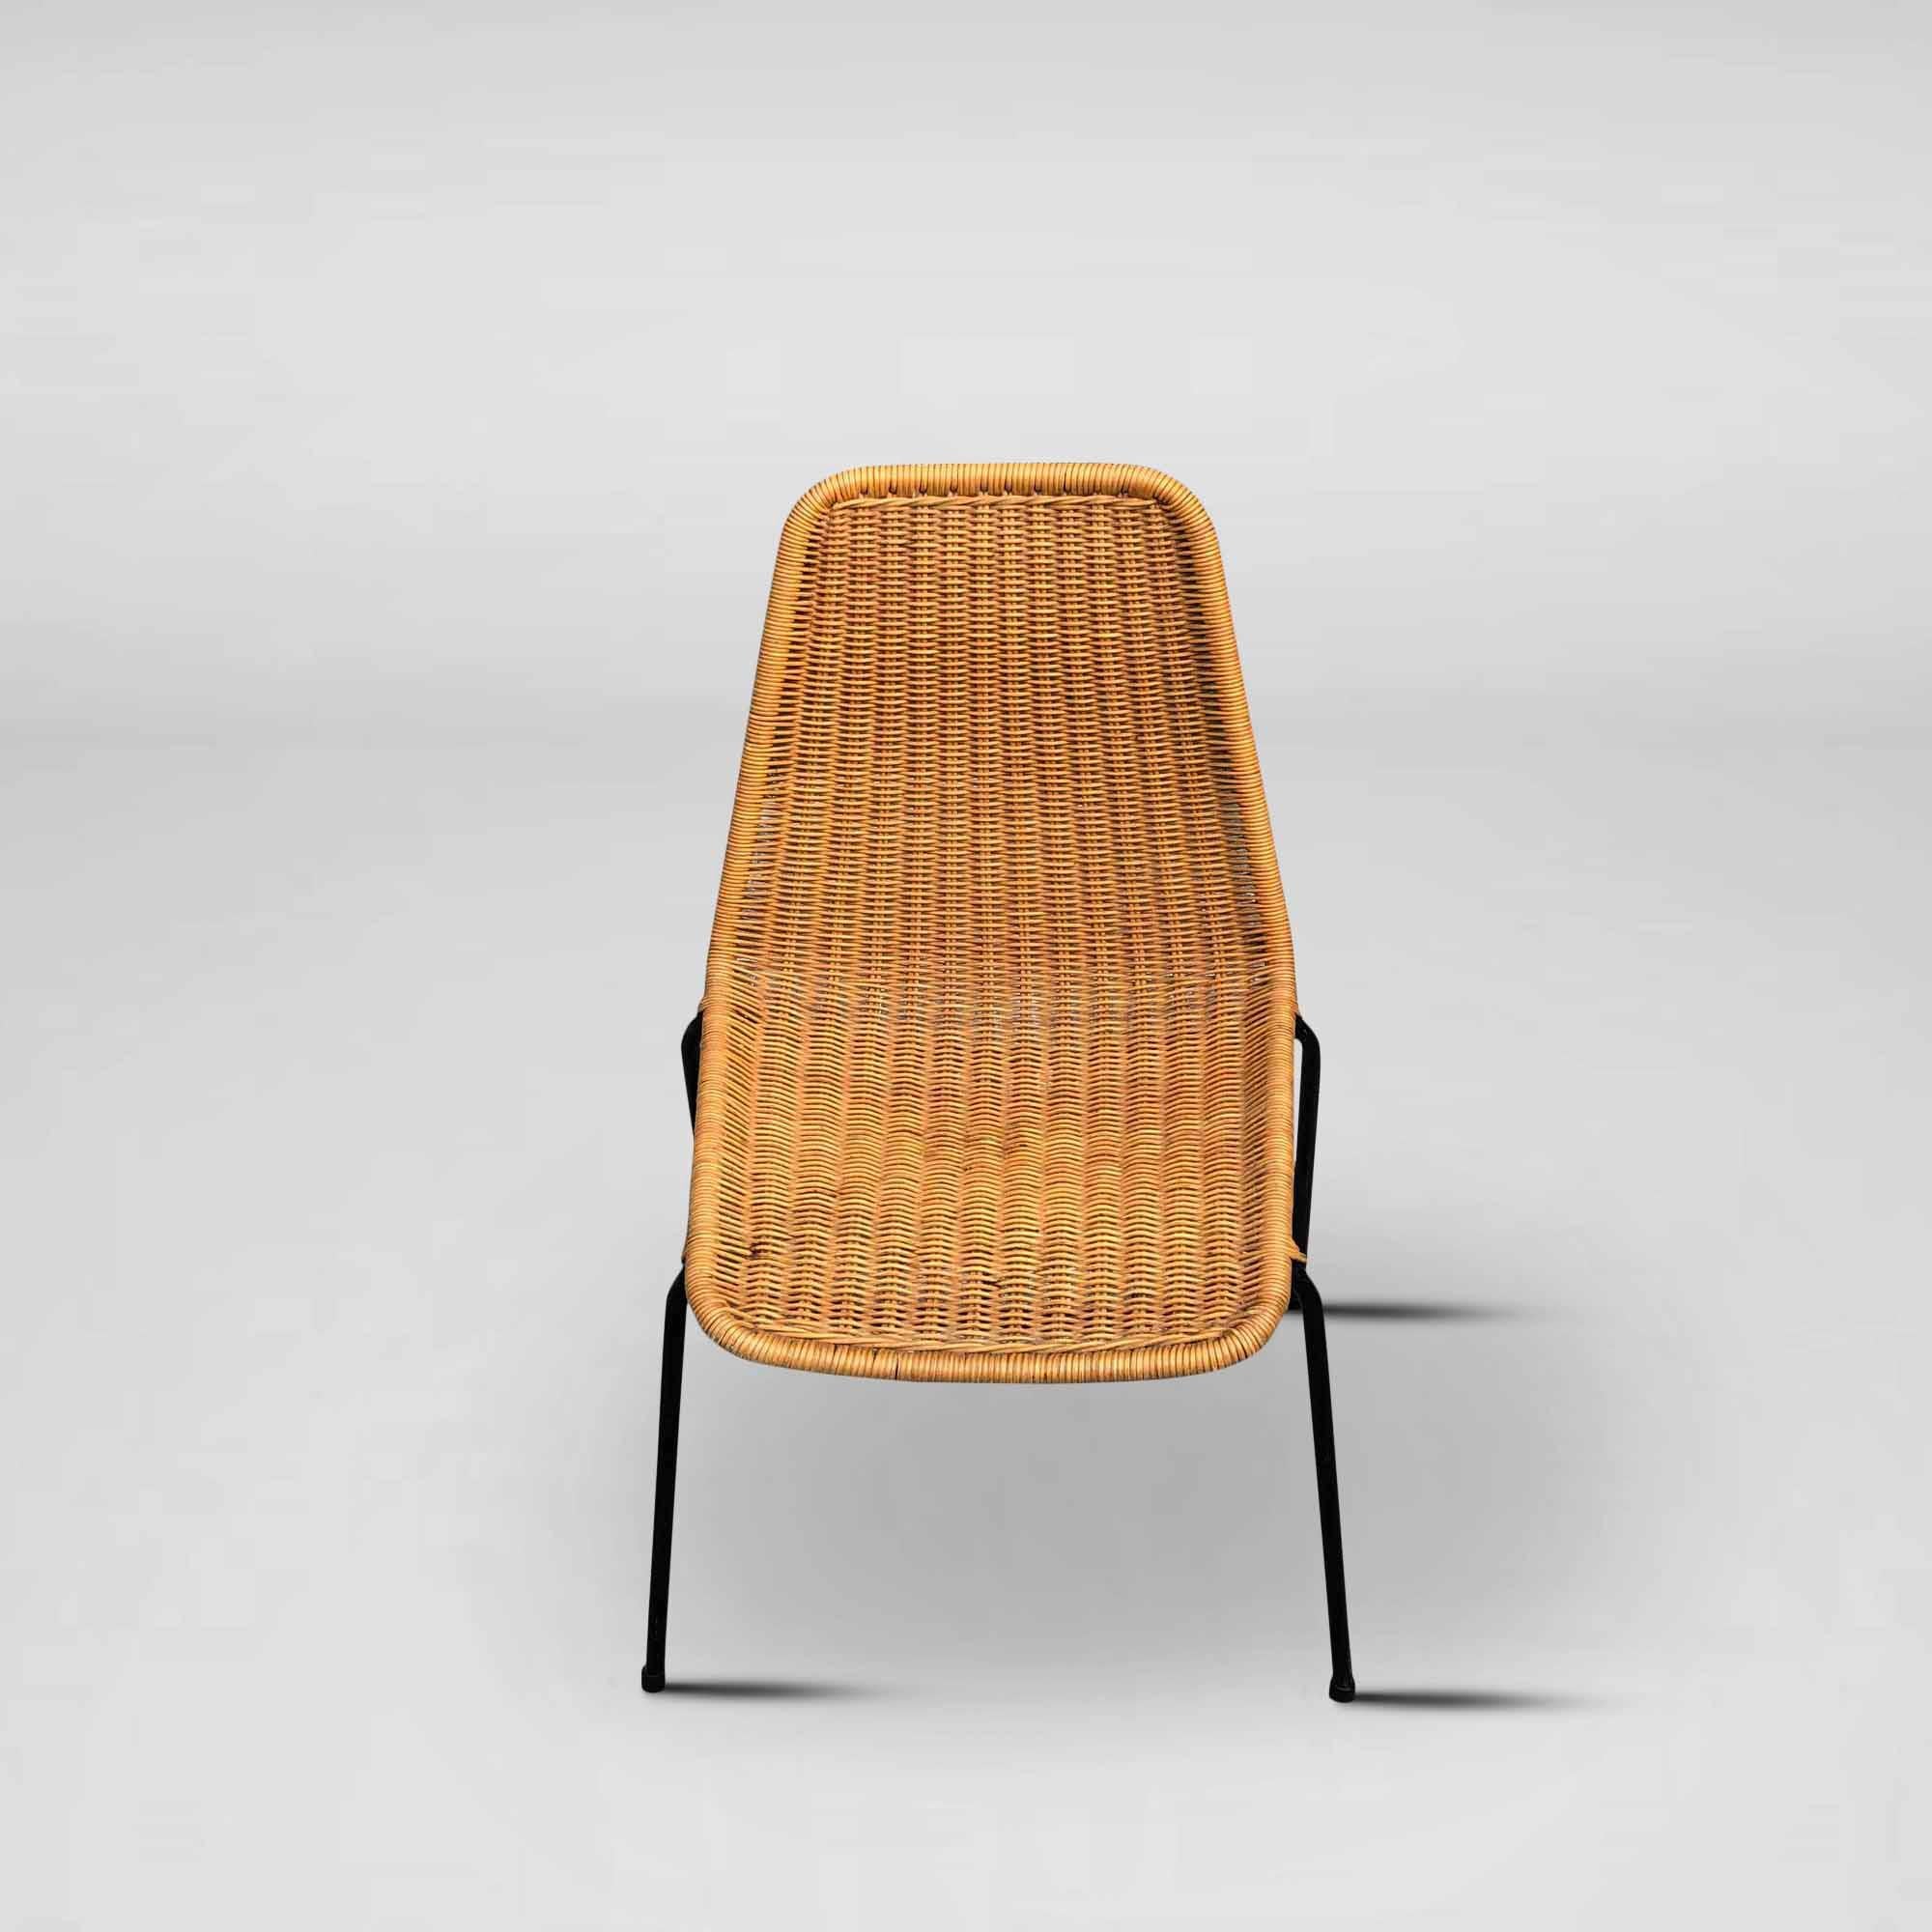 Iron Basket Chairs by Gian Franco Legler, set of 2